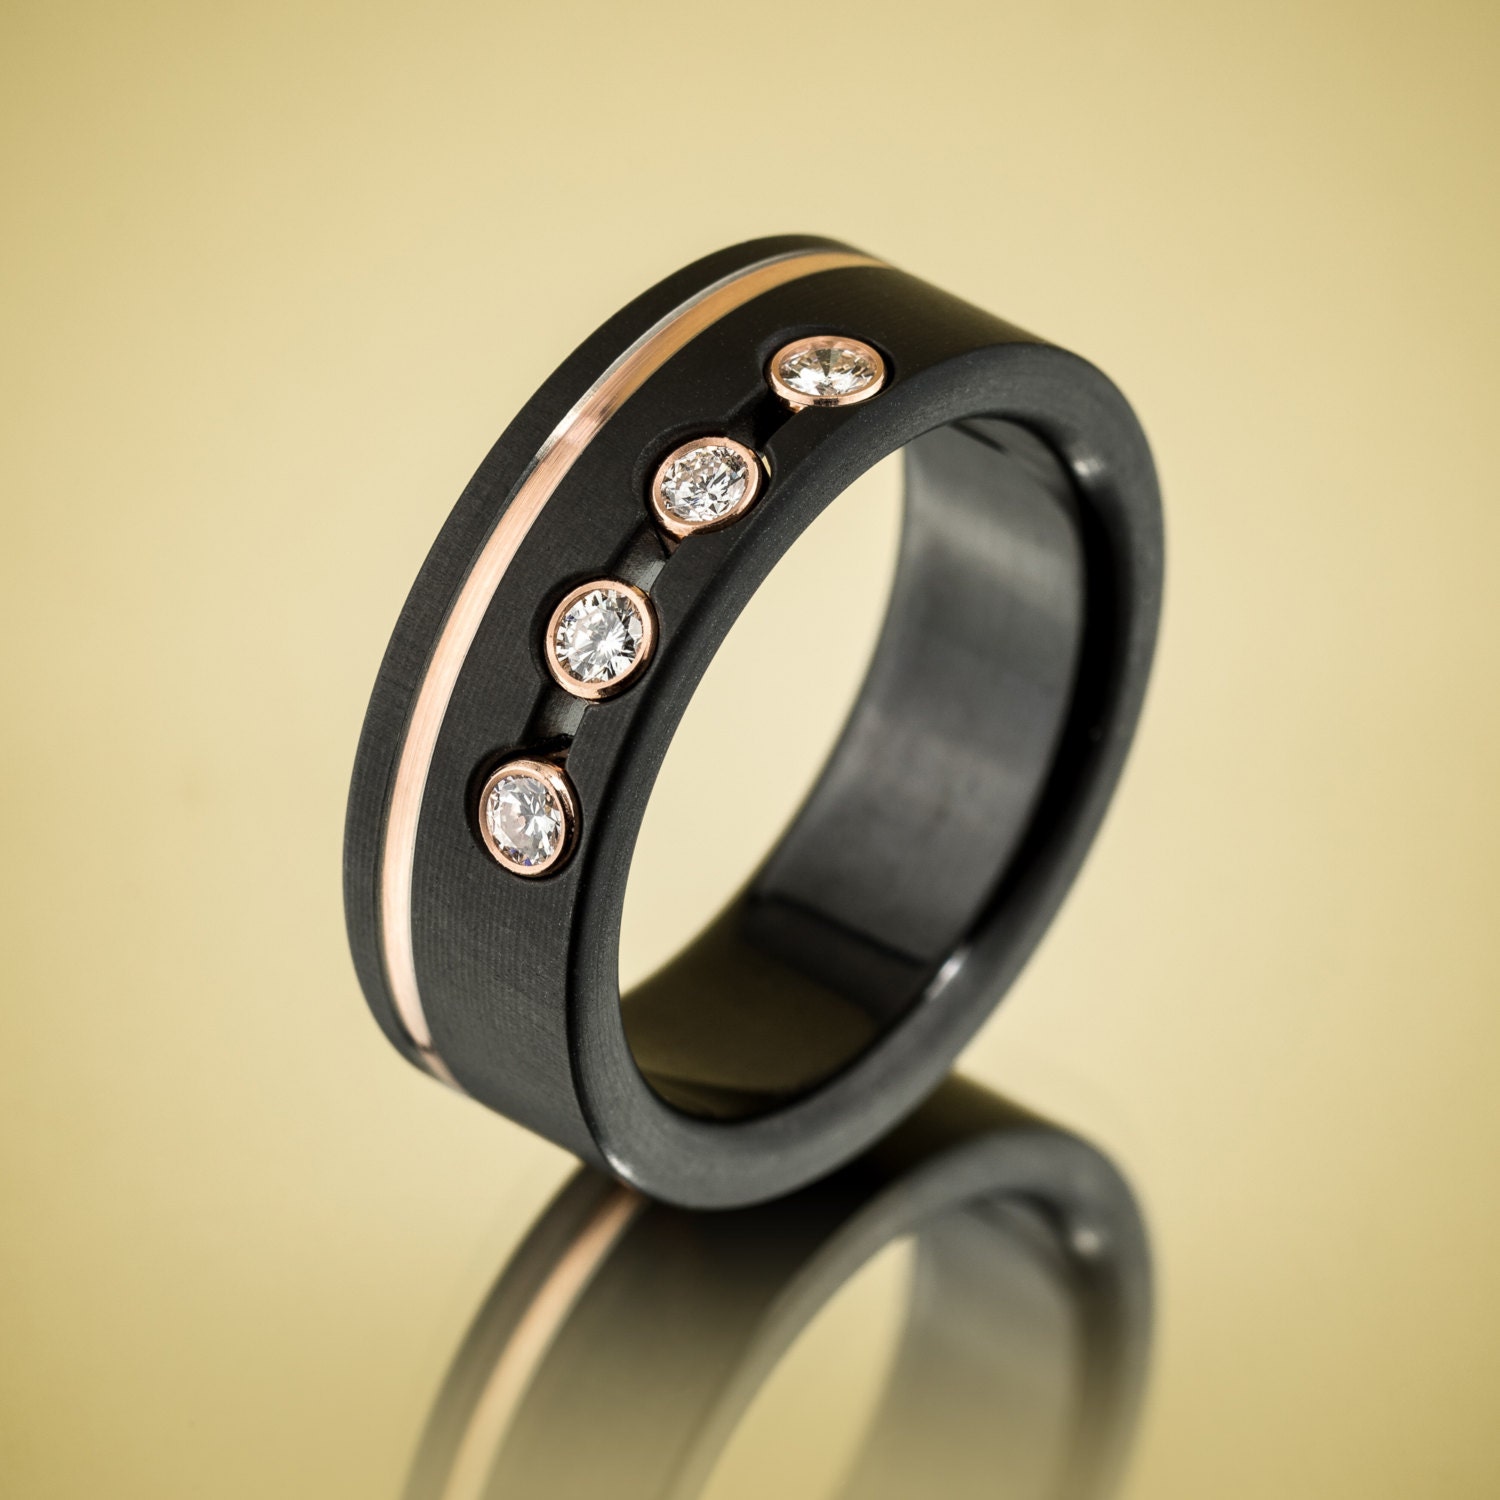 Men's Wedding Band Black Zirconium Rose Gold Diamond Ring